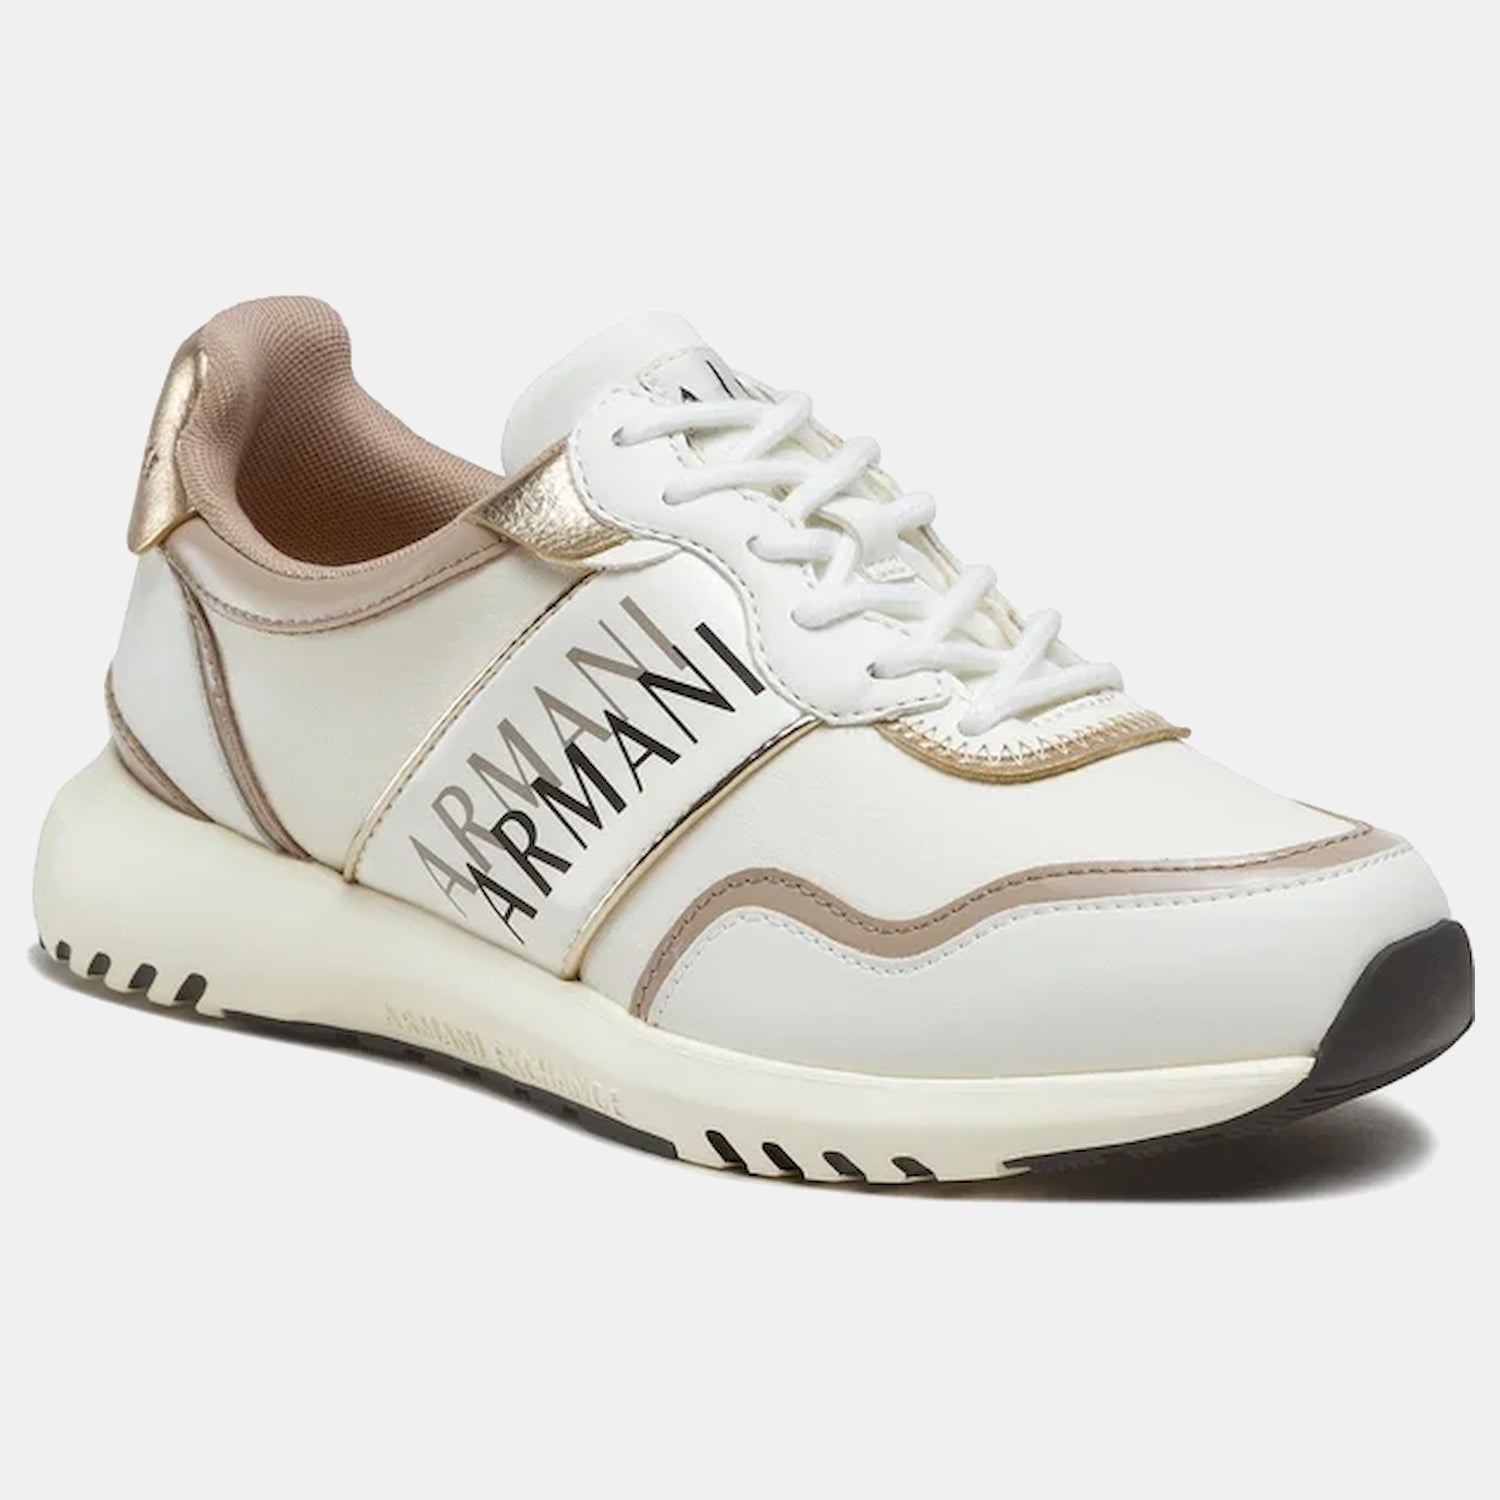 Armani Exchange Sapatilhas Sneakers Shoes Xdx087 Xv450 White Beig Branco Beige_shot4